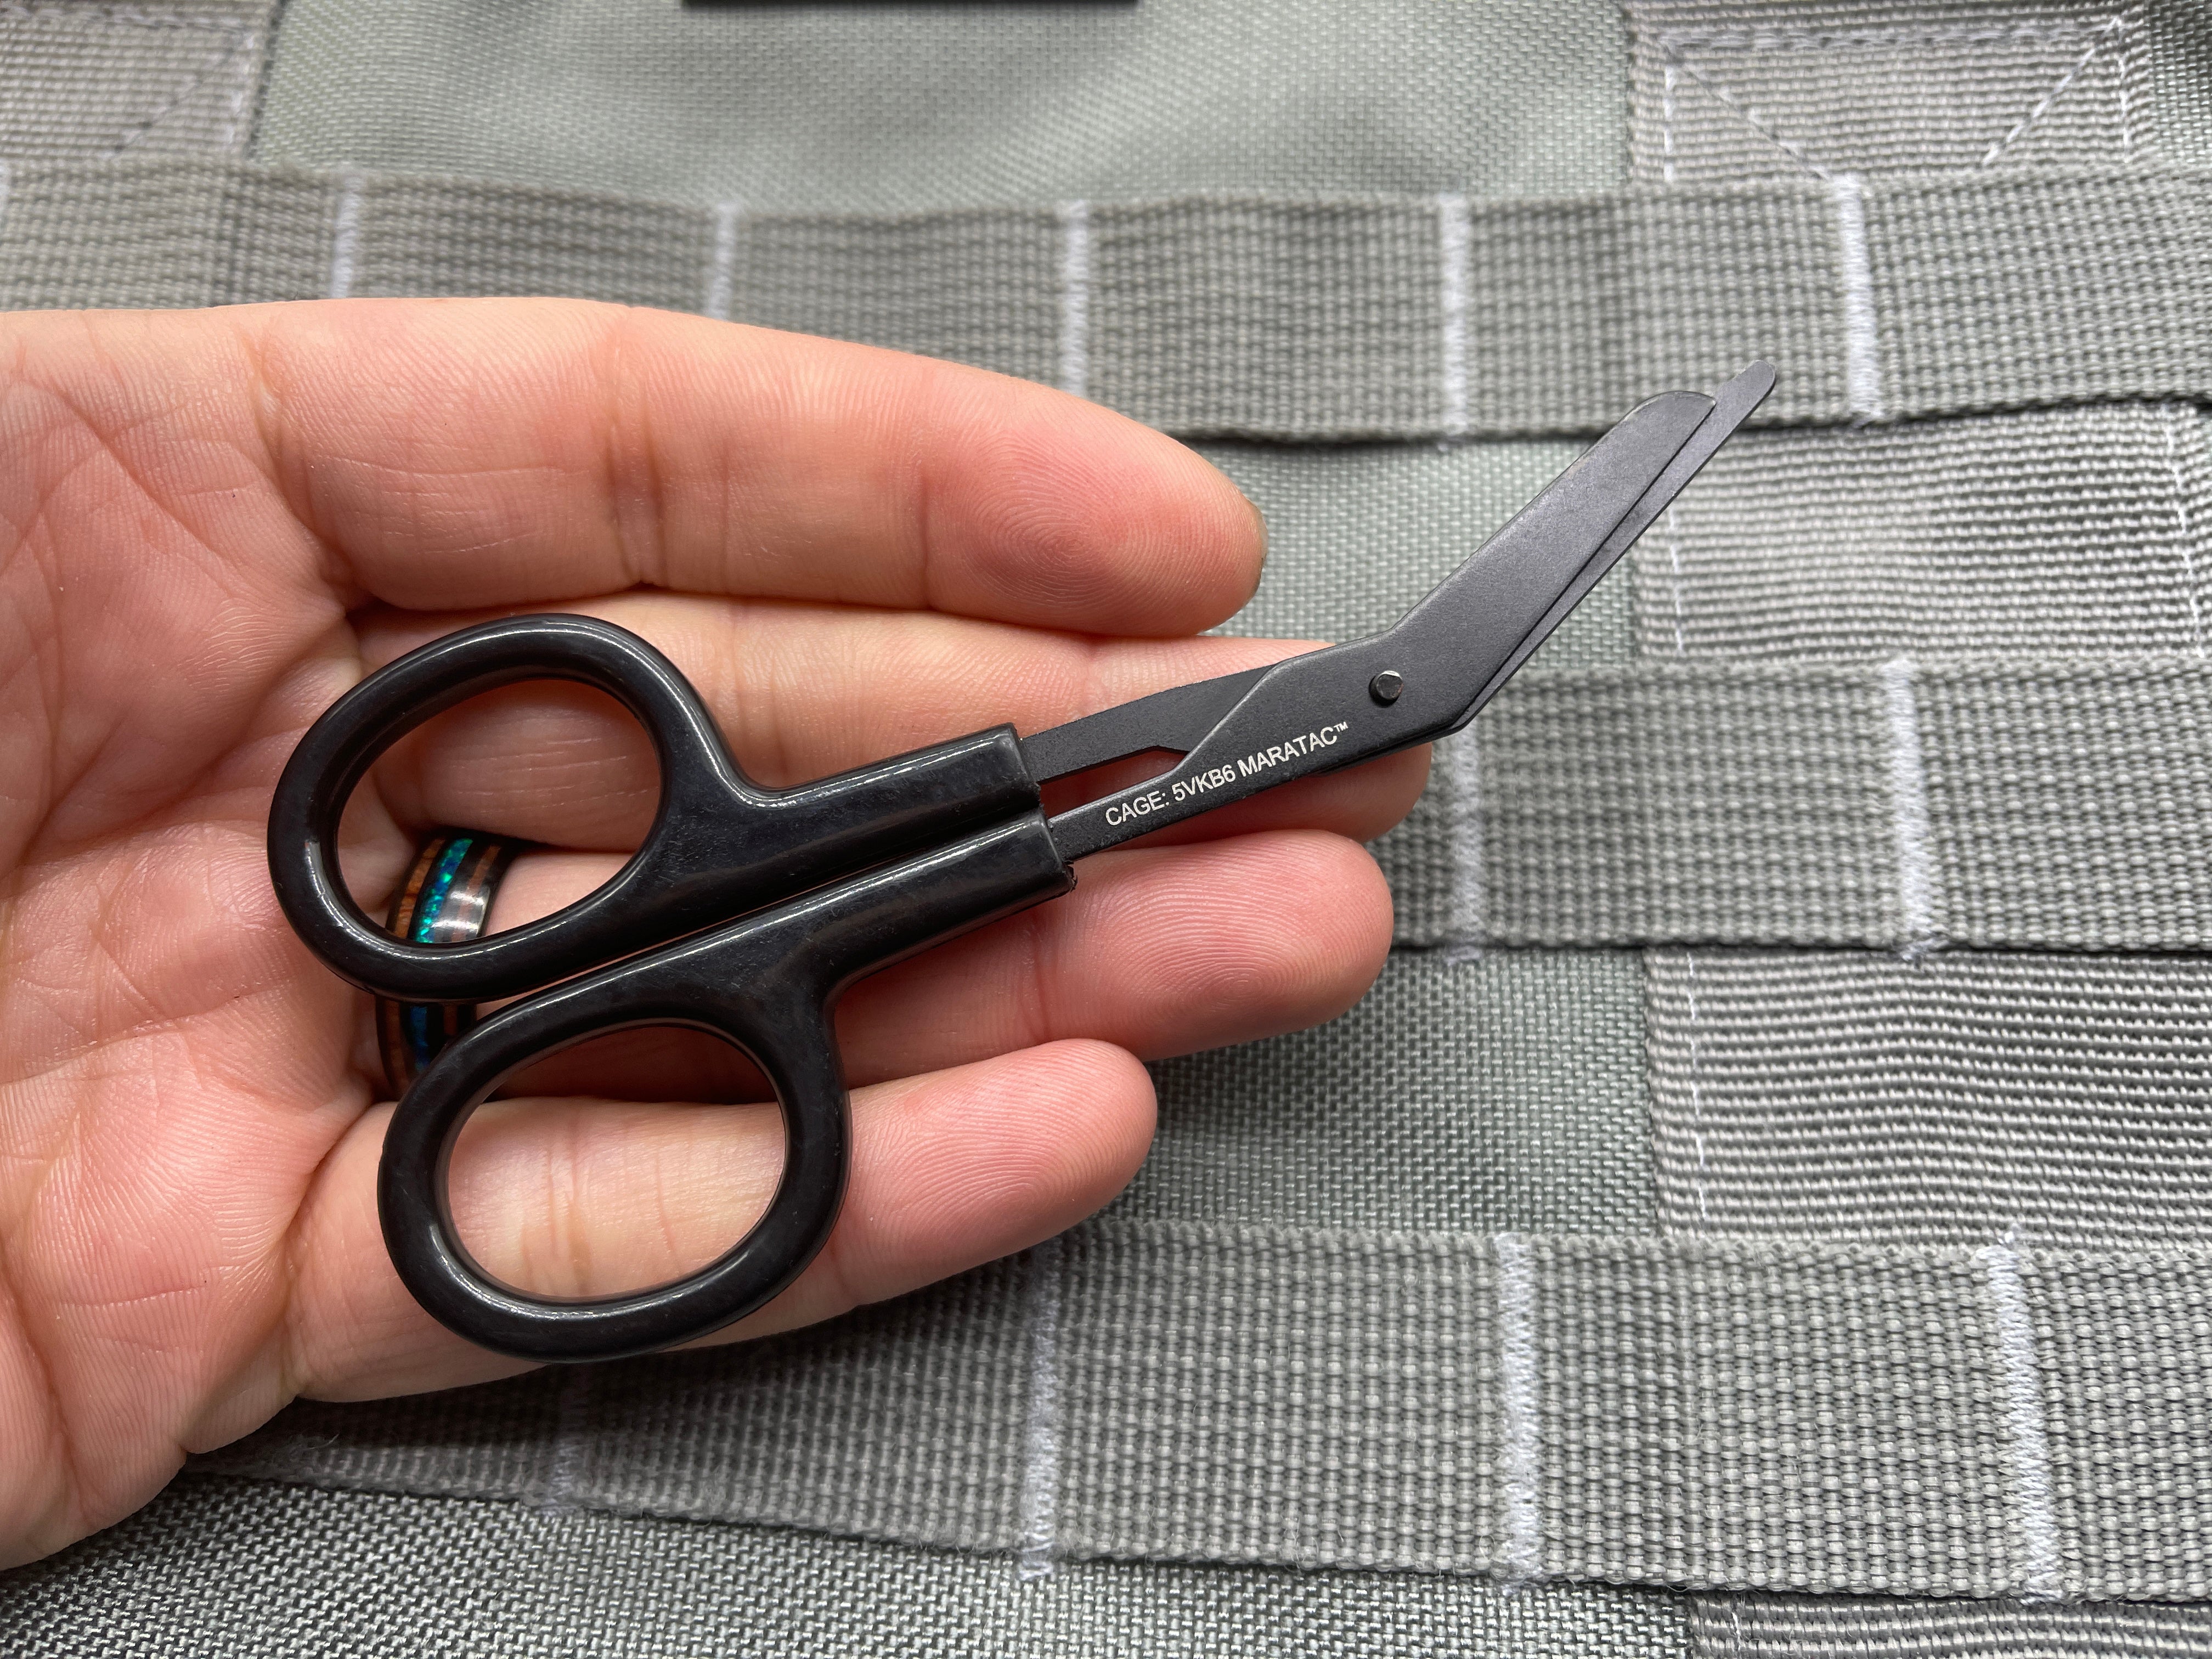 Mini Utility Scissors By Maratac® Gen 2 – CountyComm